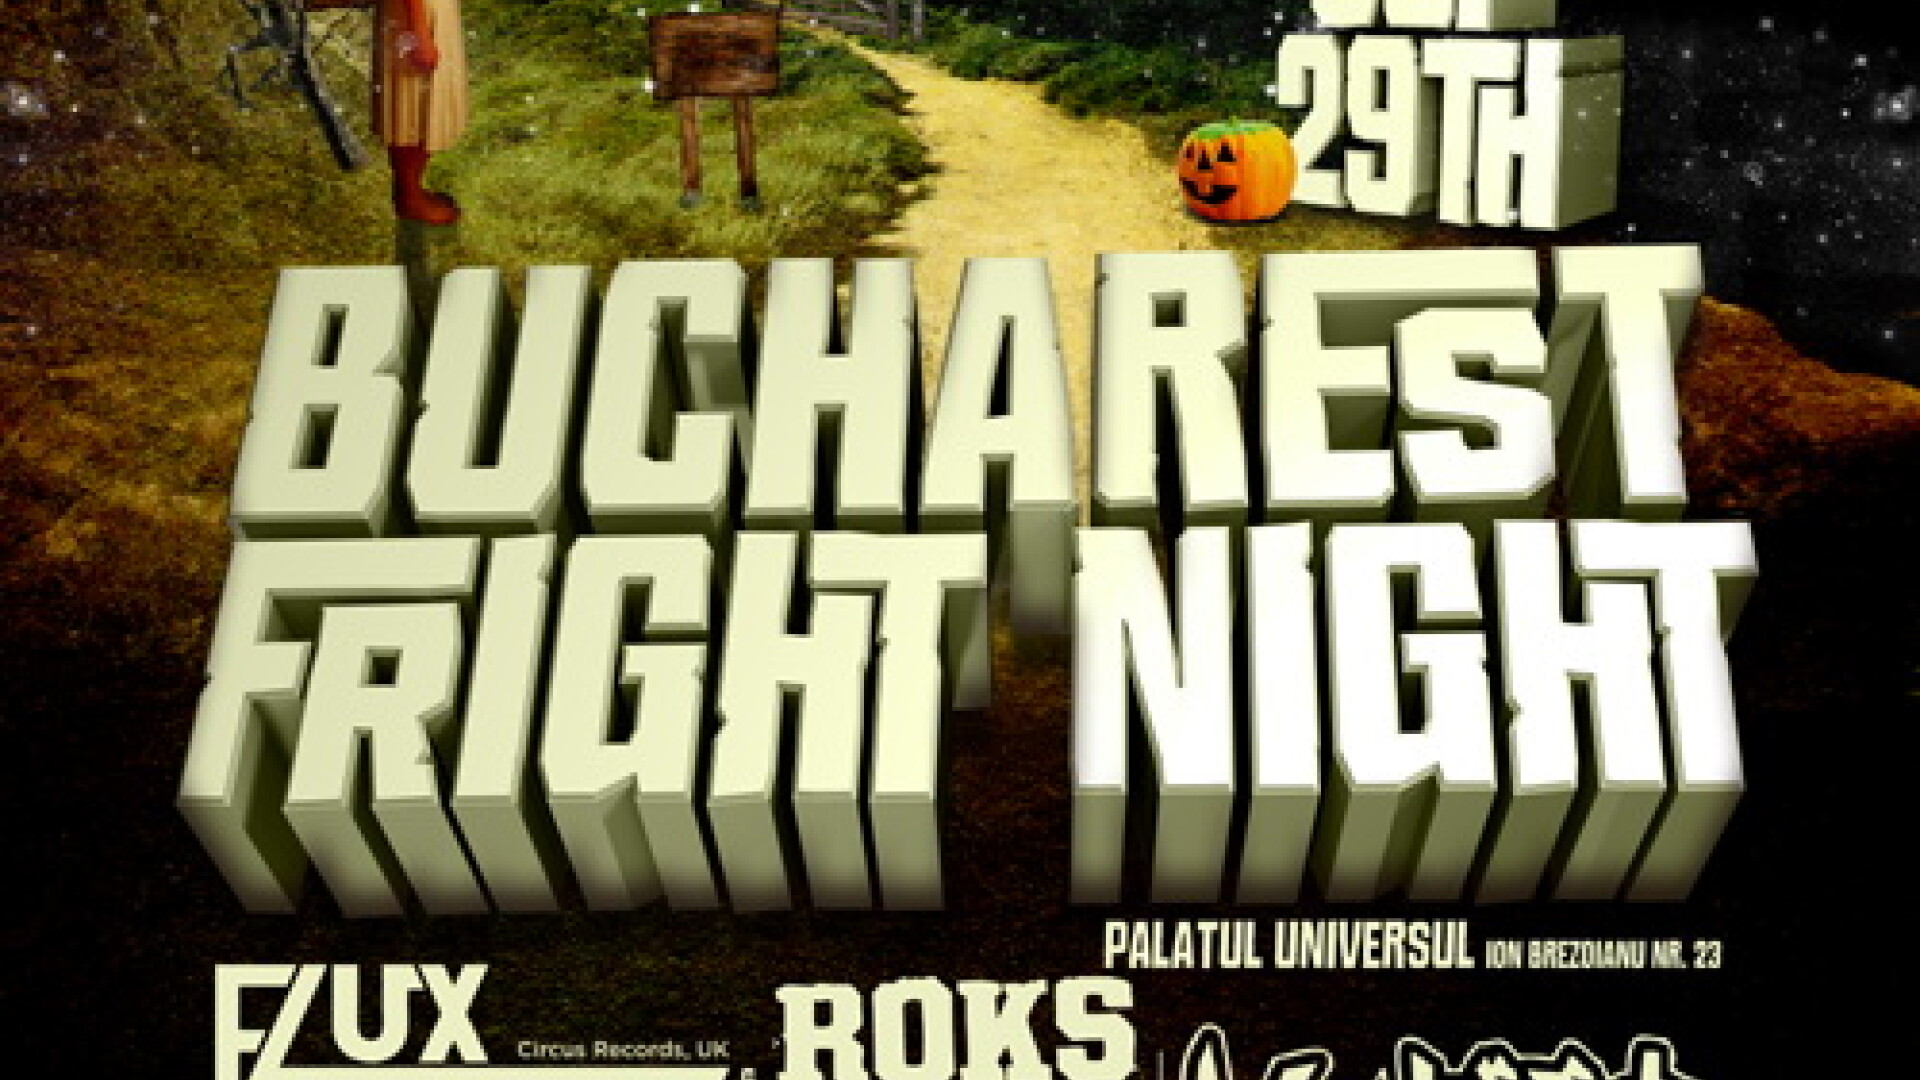 Bucharest Fright Night